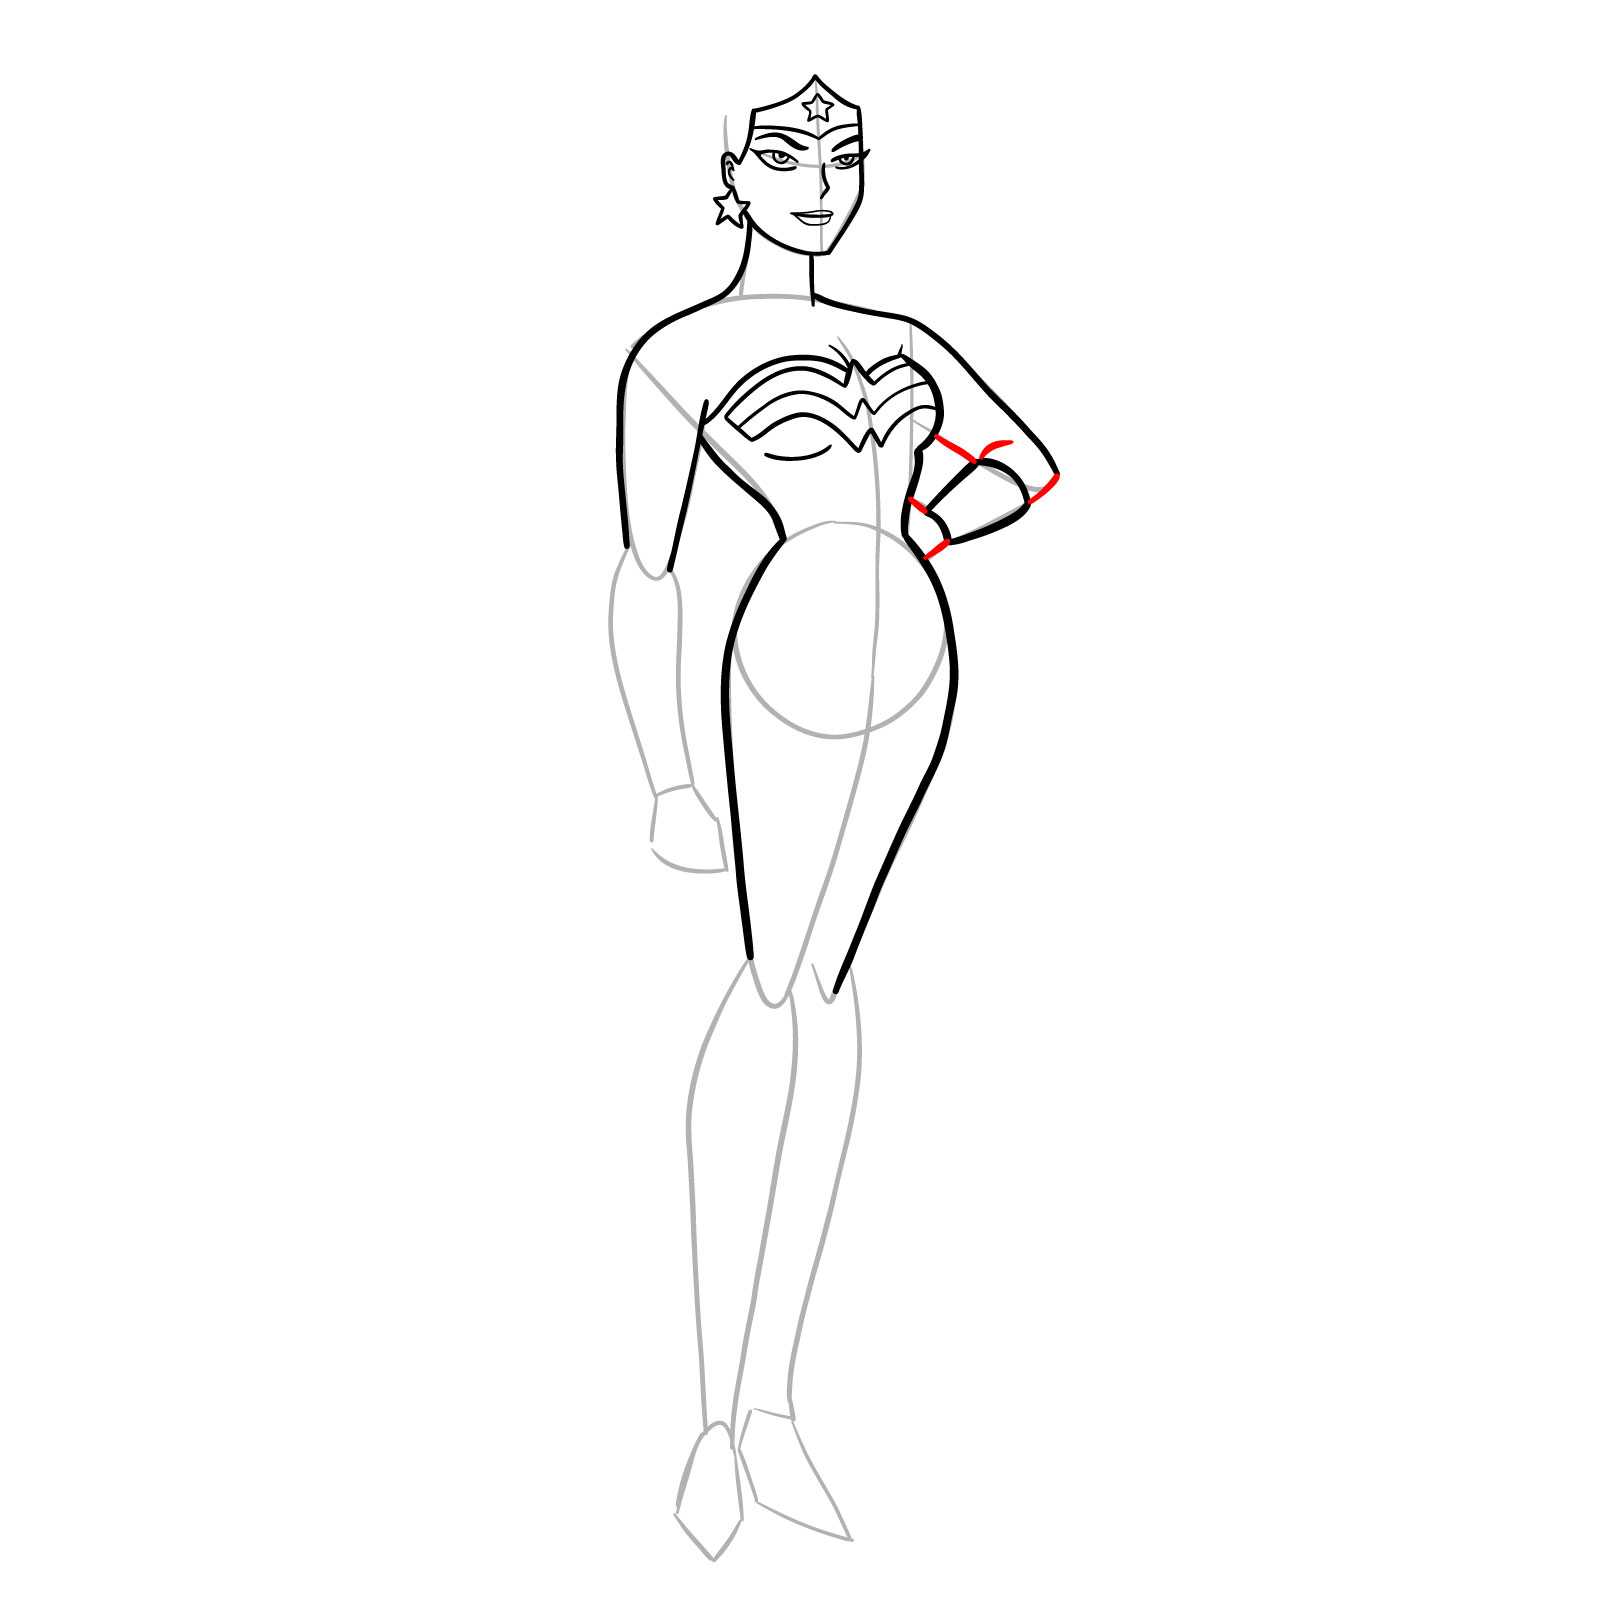 How to draw Wonder Woman cartoon style - step 18